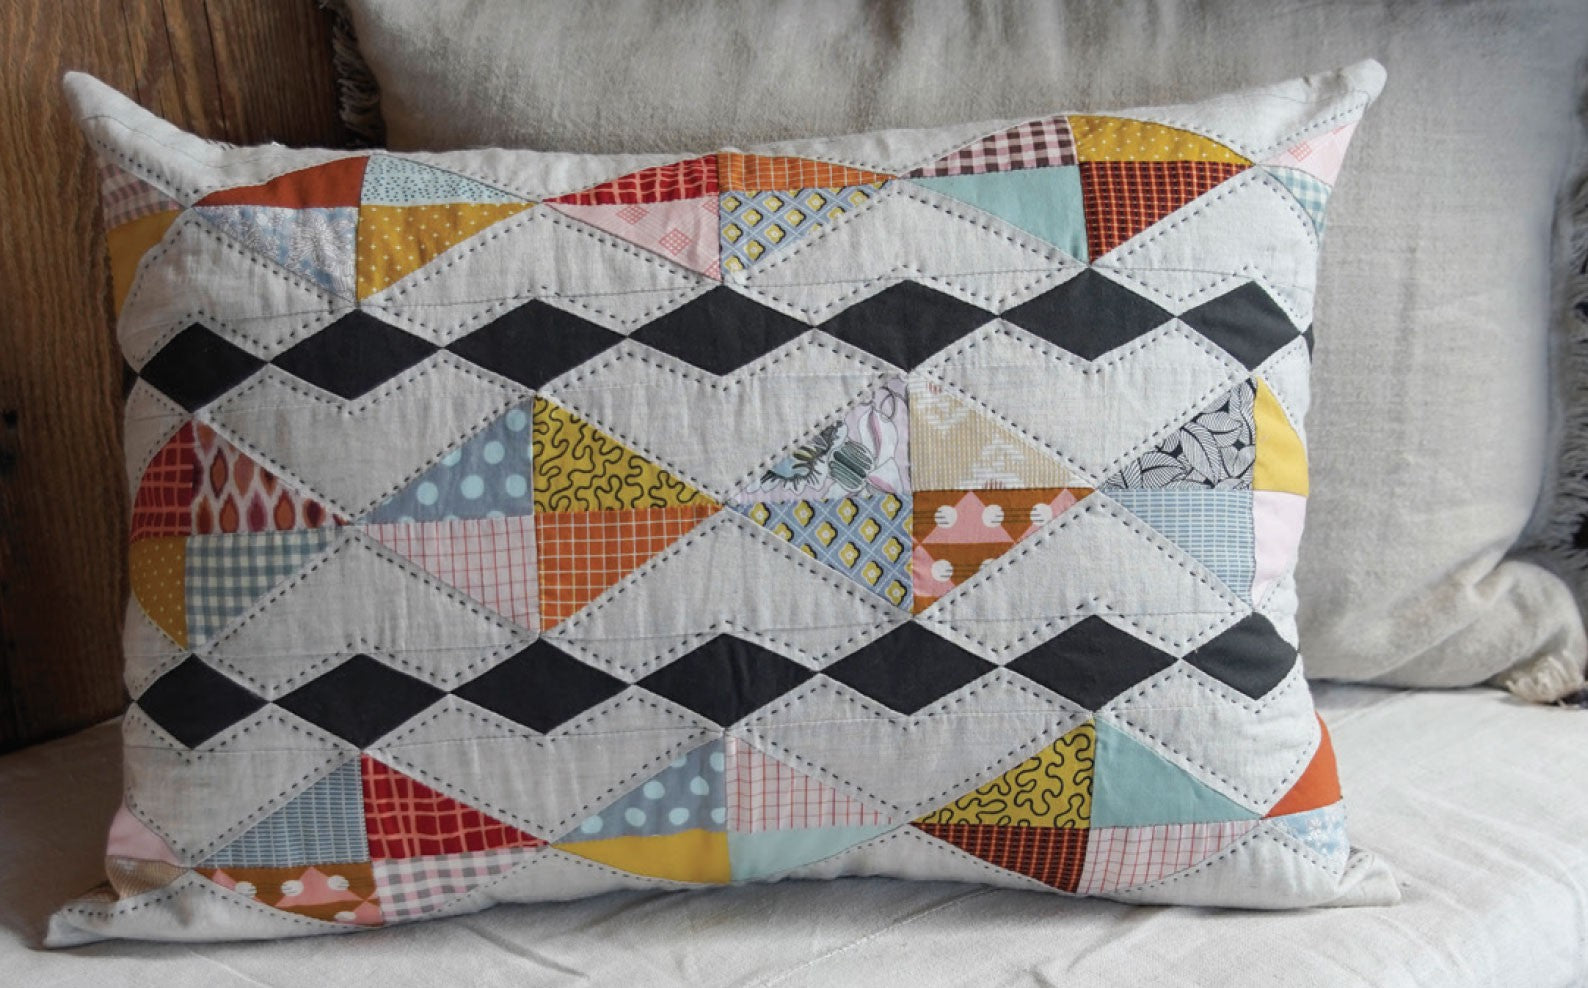 Quilt Recipes  Jen Kingwell – Little Fabric Shop